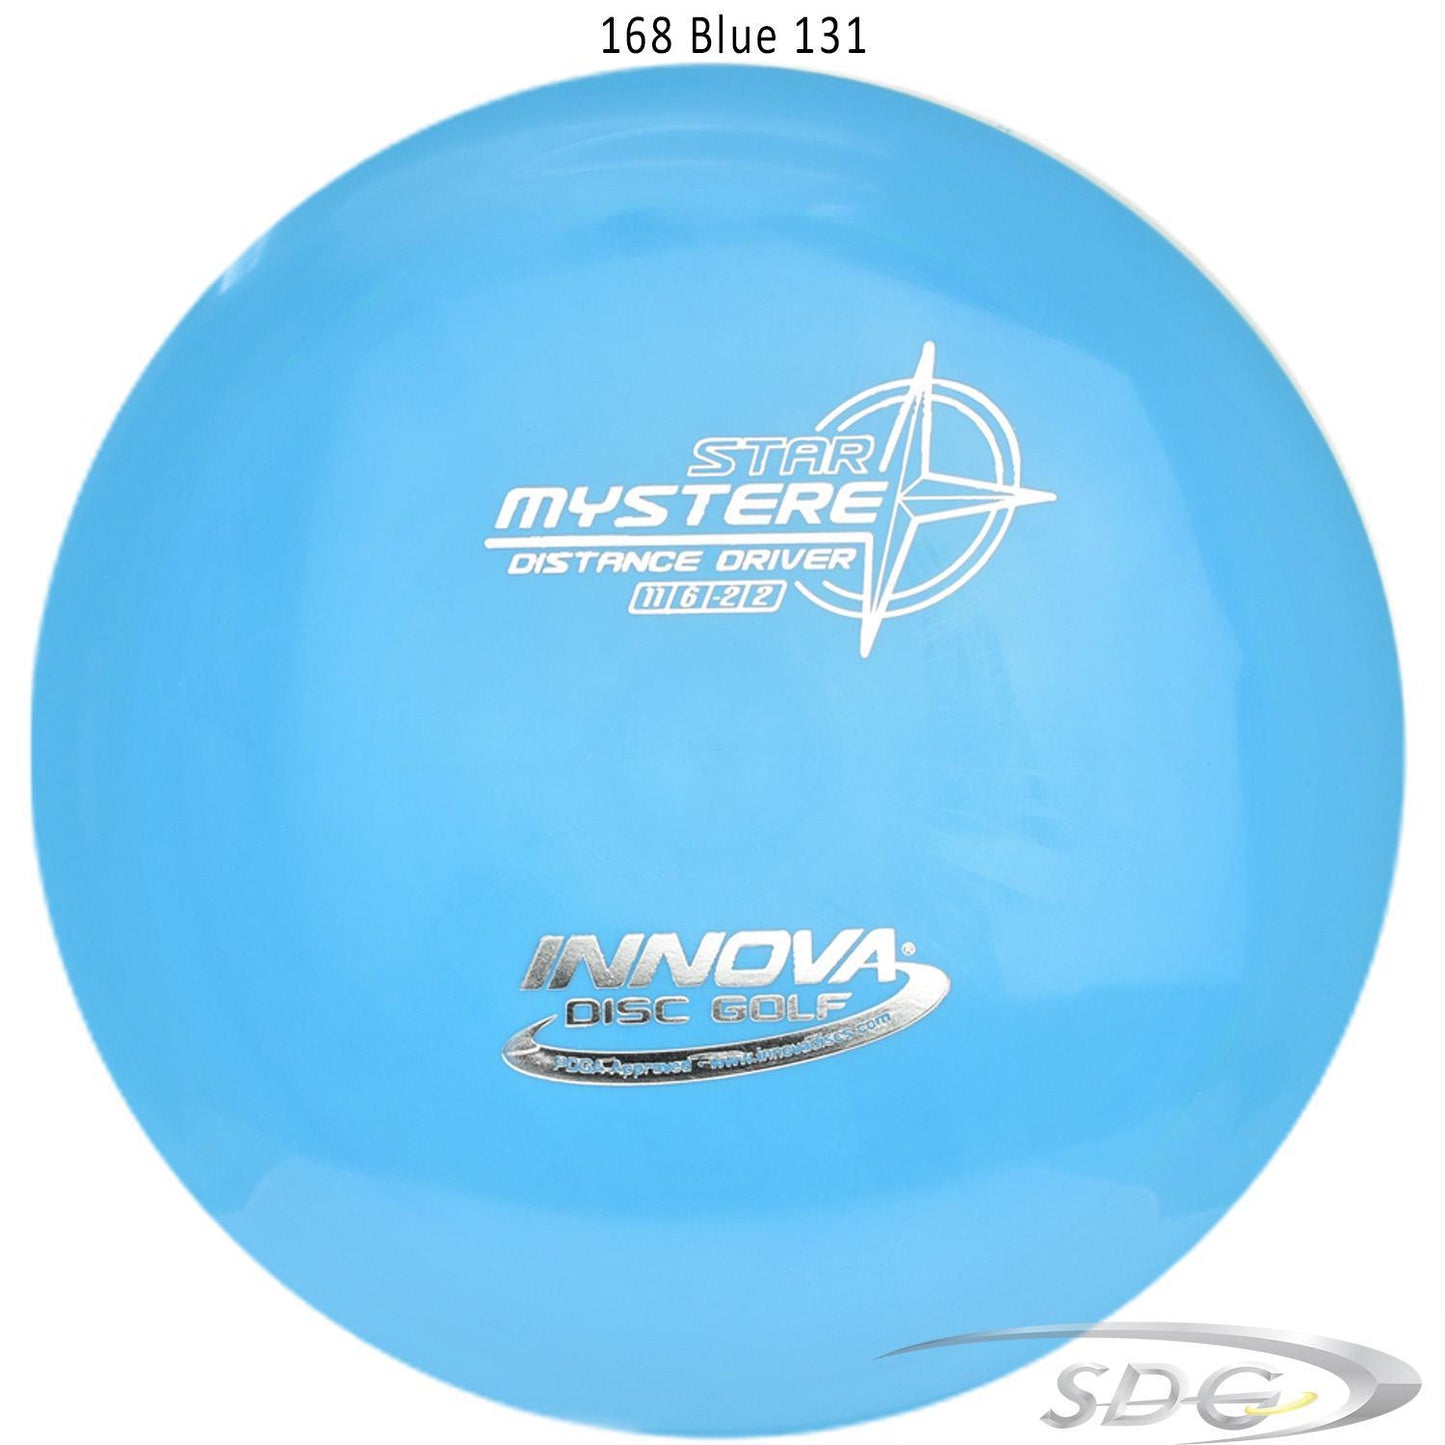 innova-star-mystere-disc-golf-distance-driver 168 Blue 131 